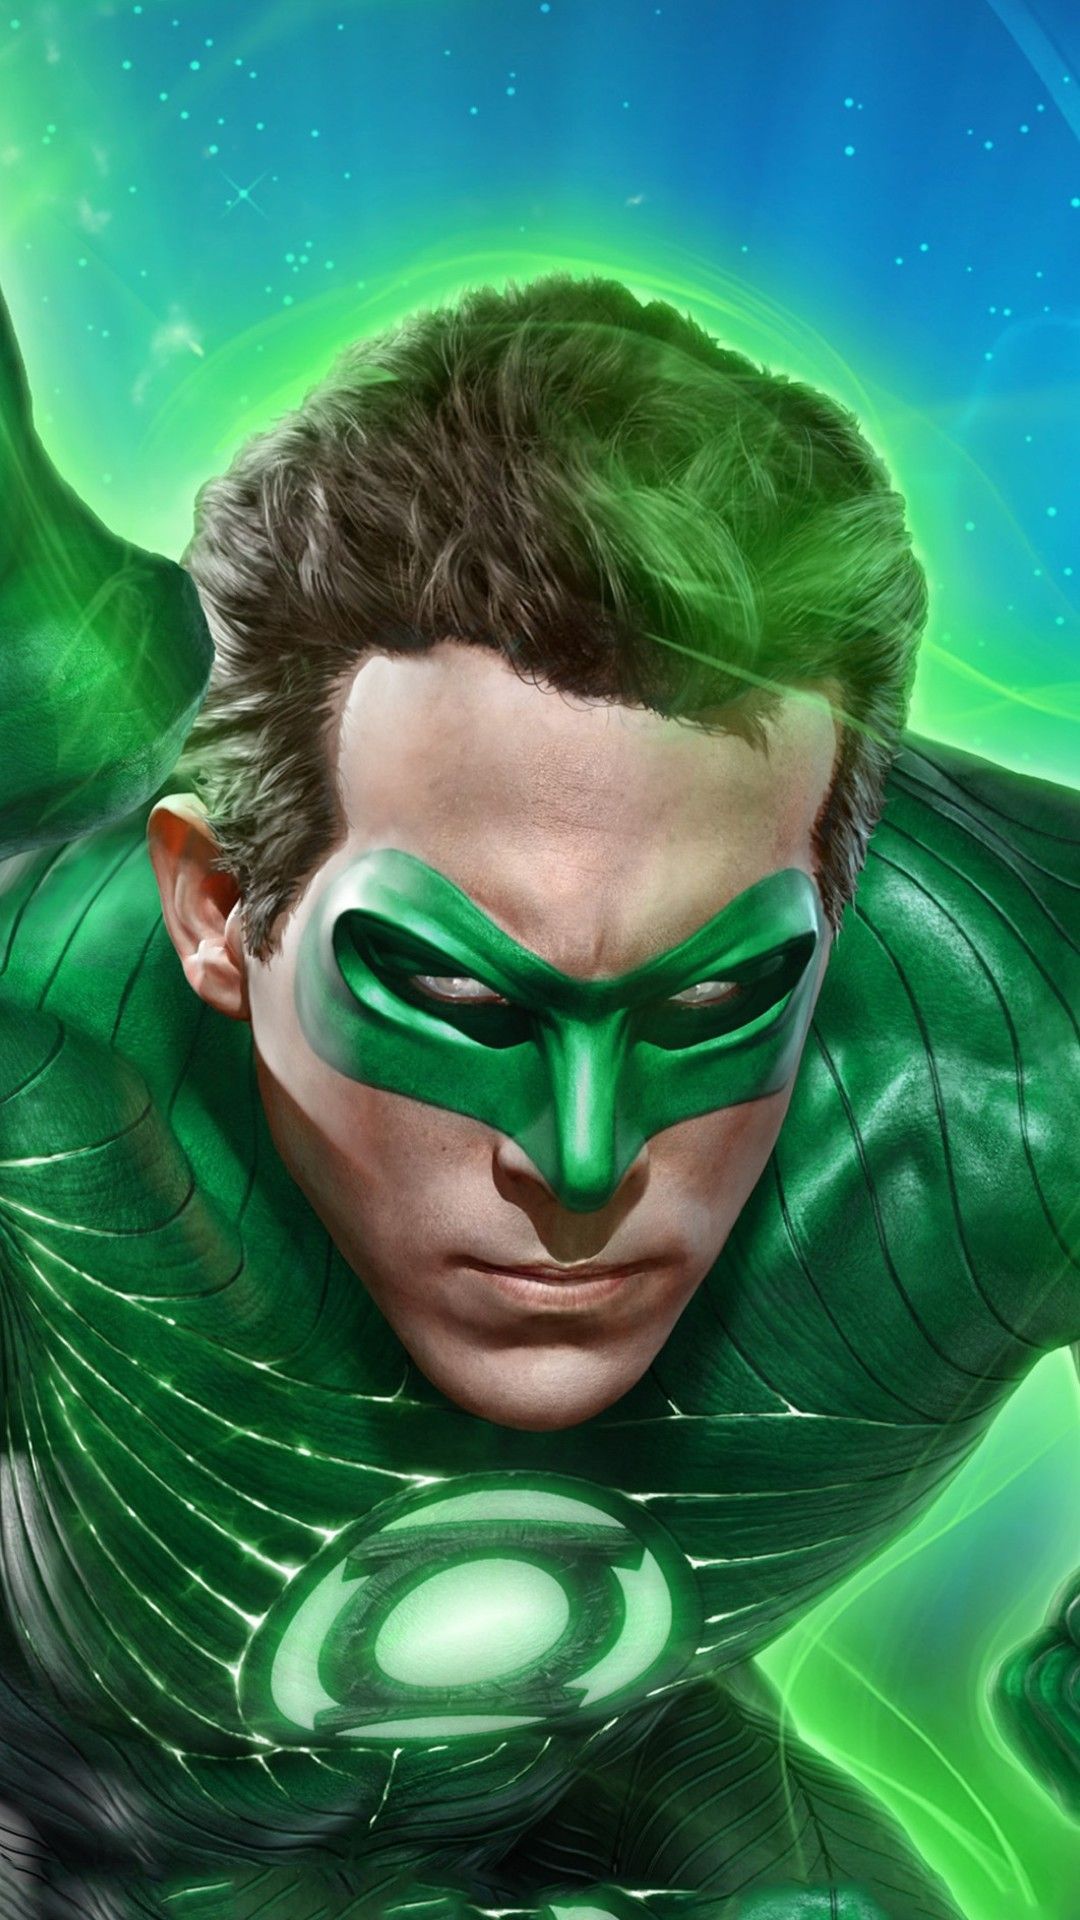 Green Lantern 4k 2019. Green lantern comics, Green lantern wallpaper, Green lantern